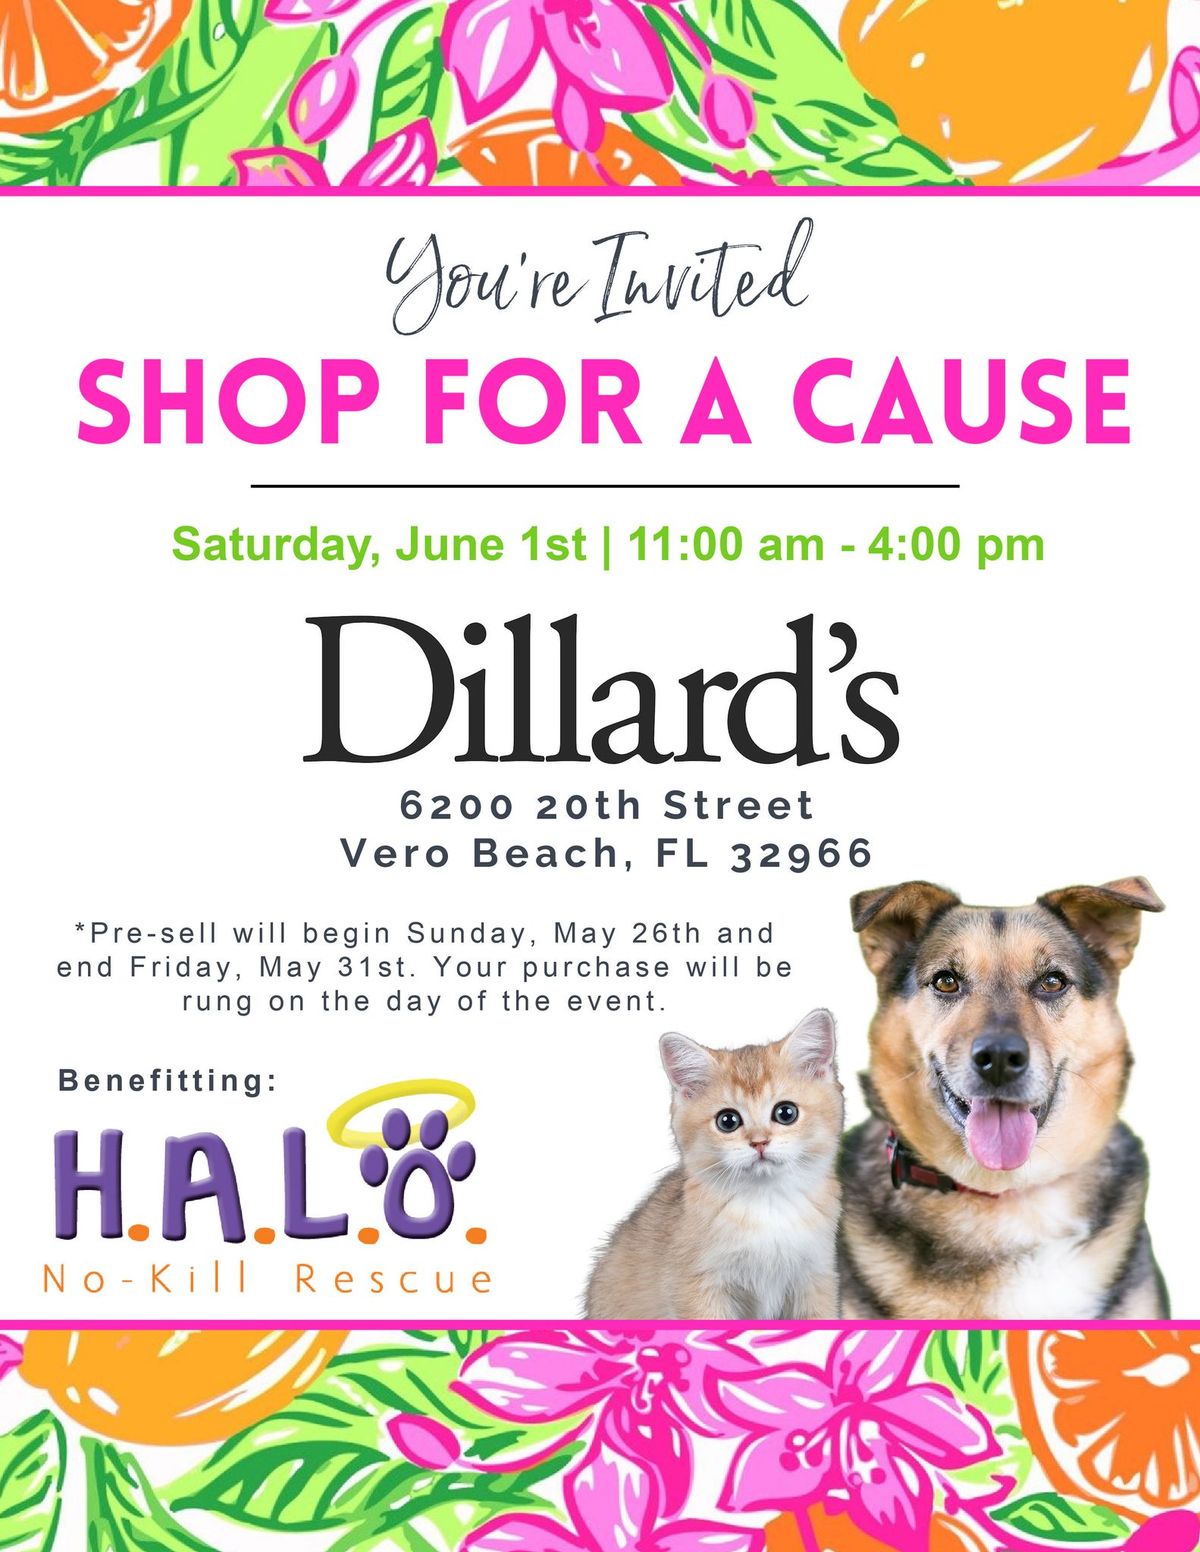 Dillard's Shop for a Cause!